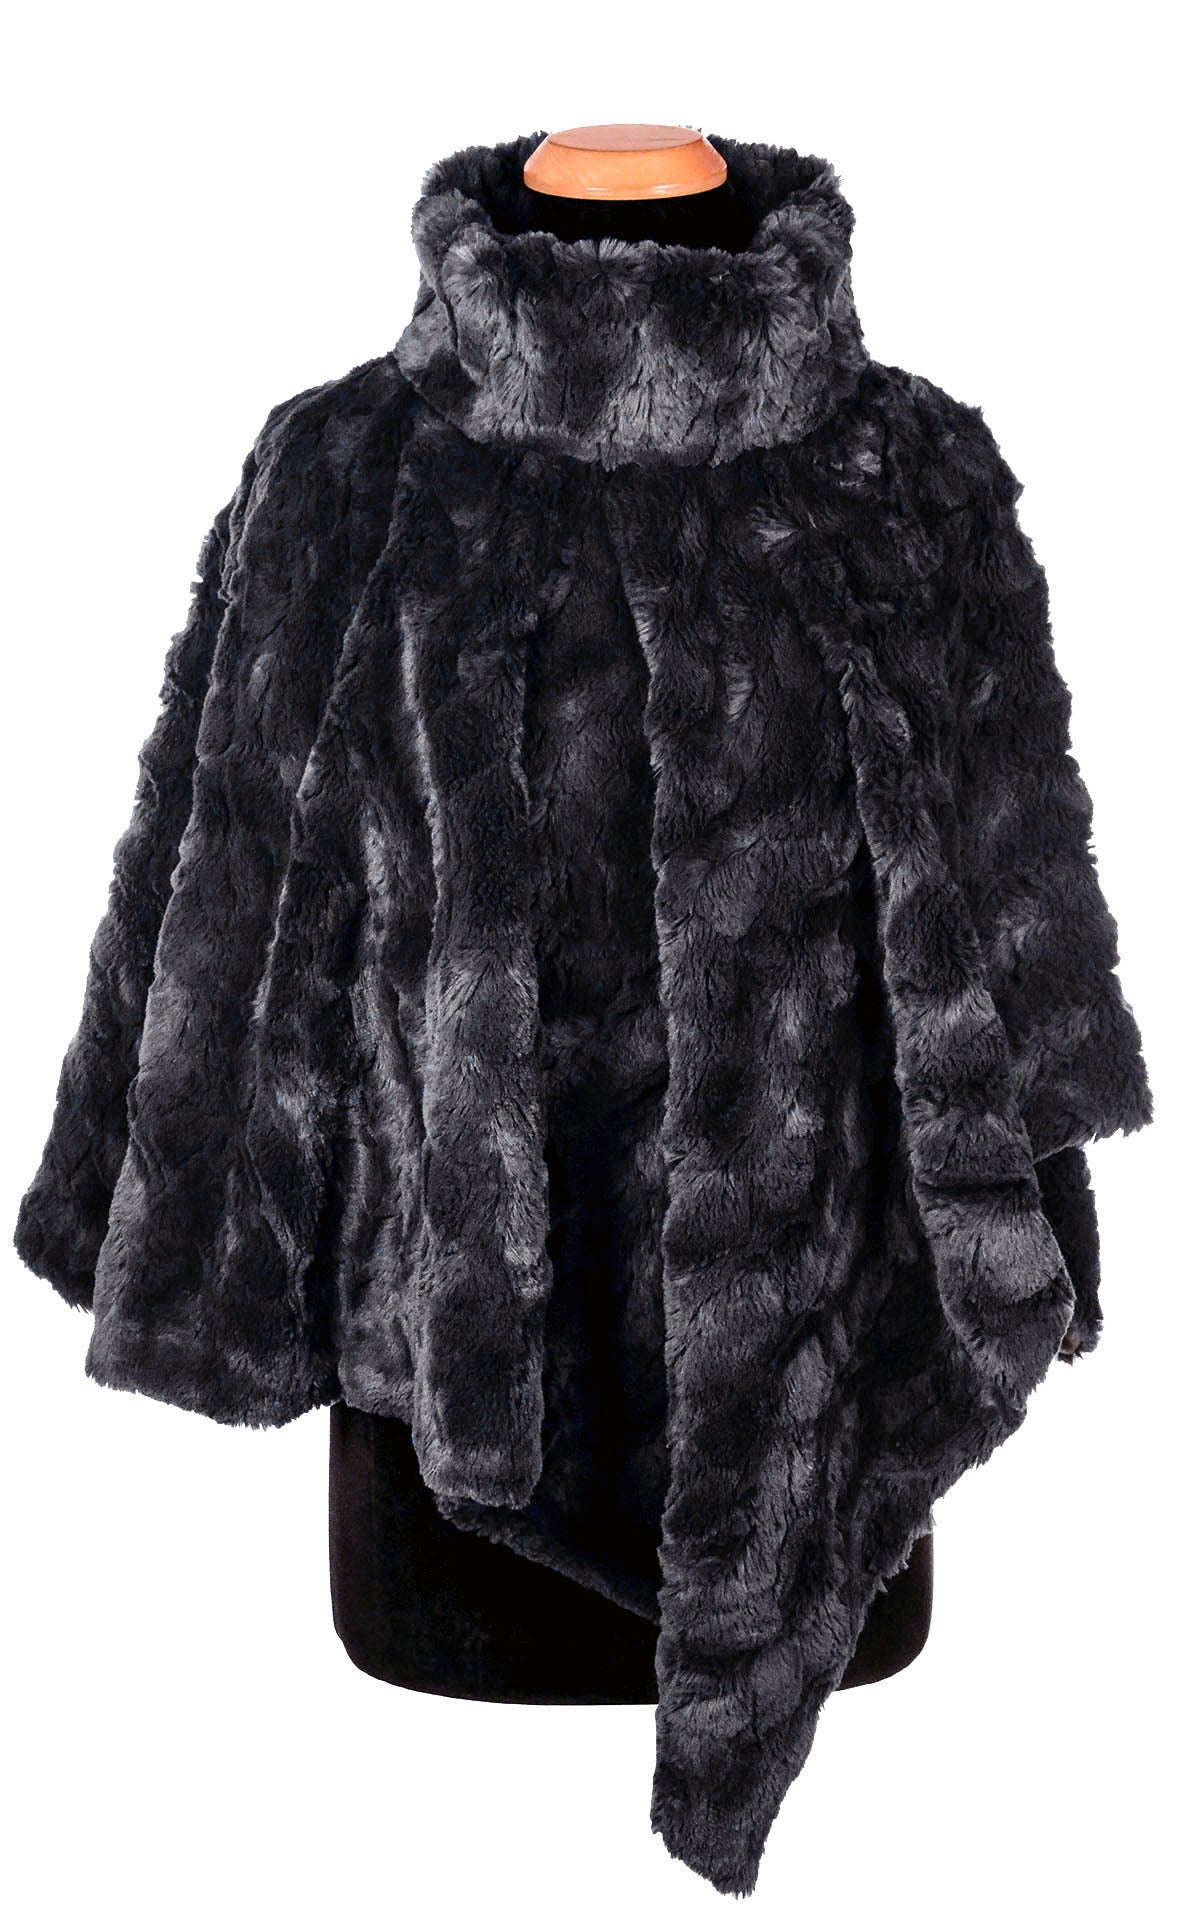 Satin Lined Poncho | Black Cuddly Faux Fur | Handmade Seattle WA USA by Pandemonium Millinery